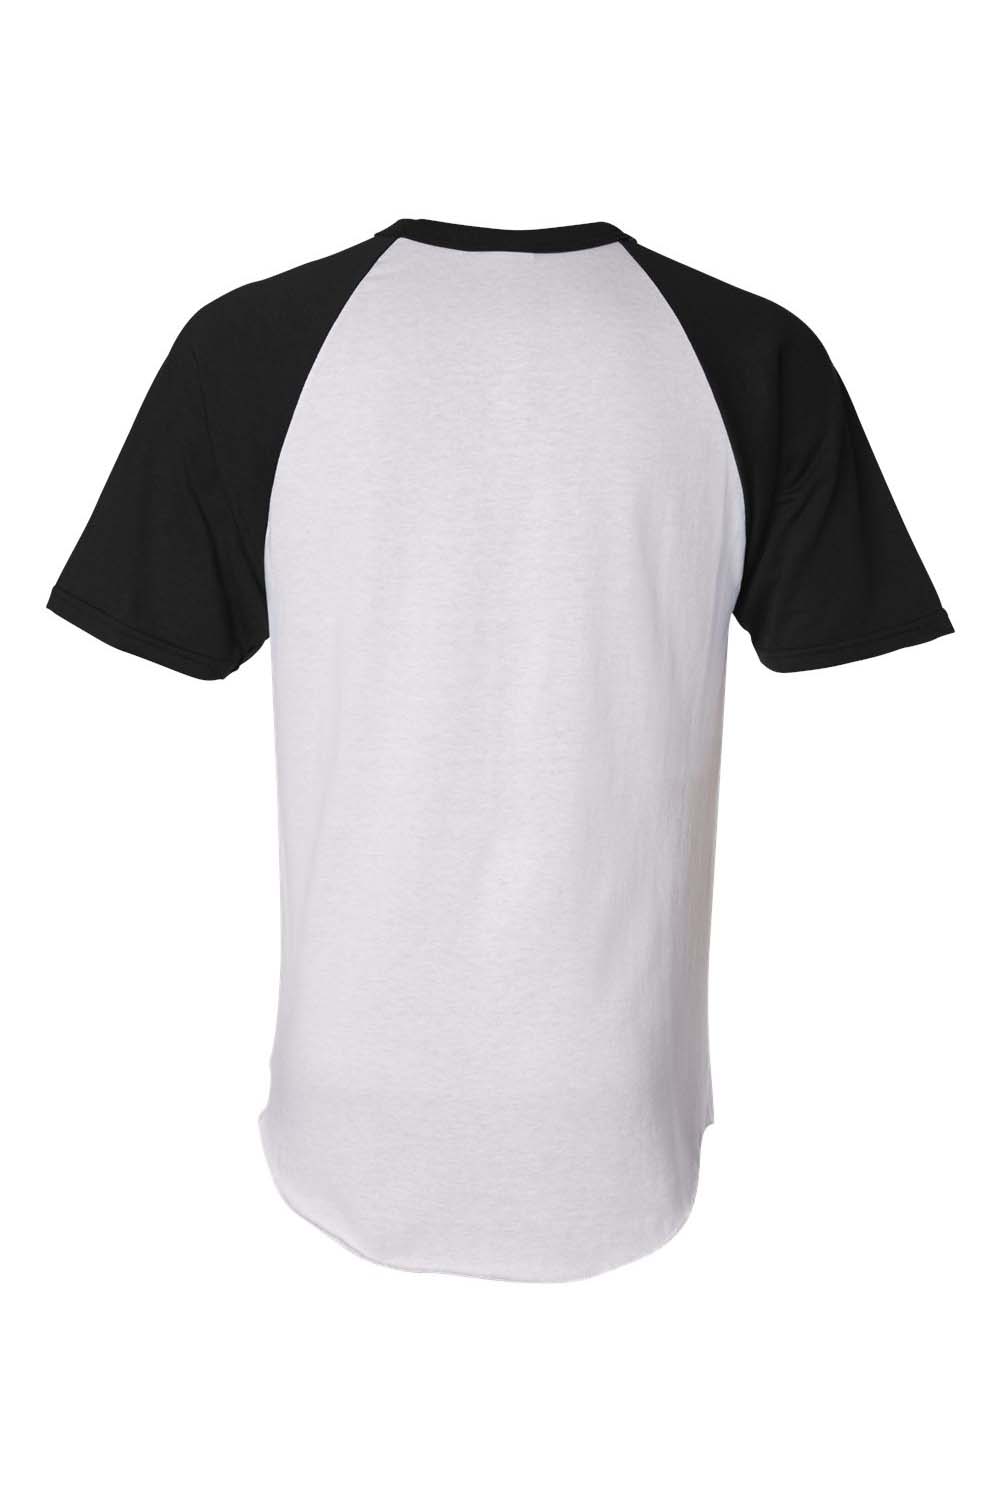 Augusta Sportswear 423 Mens Short Sleeve Crewneck T-Shirt White/Black Model Flat Back